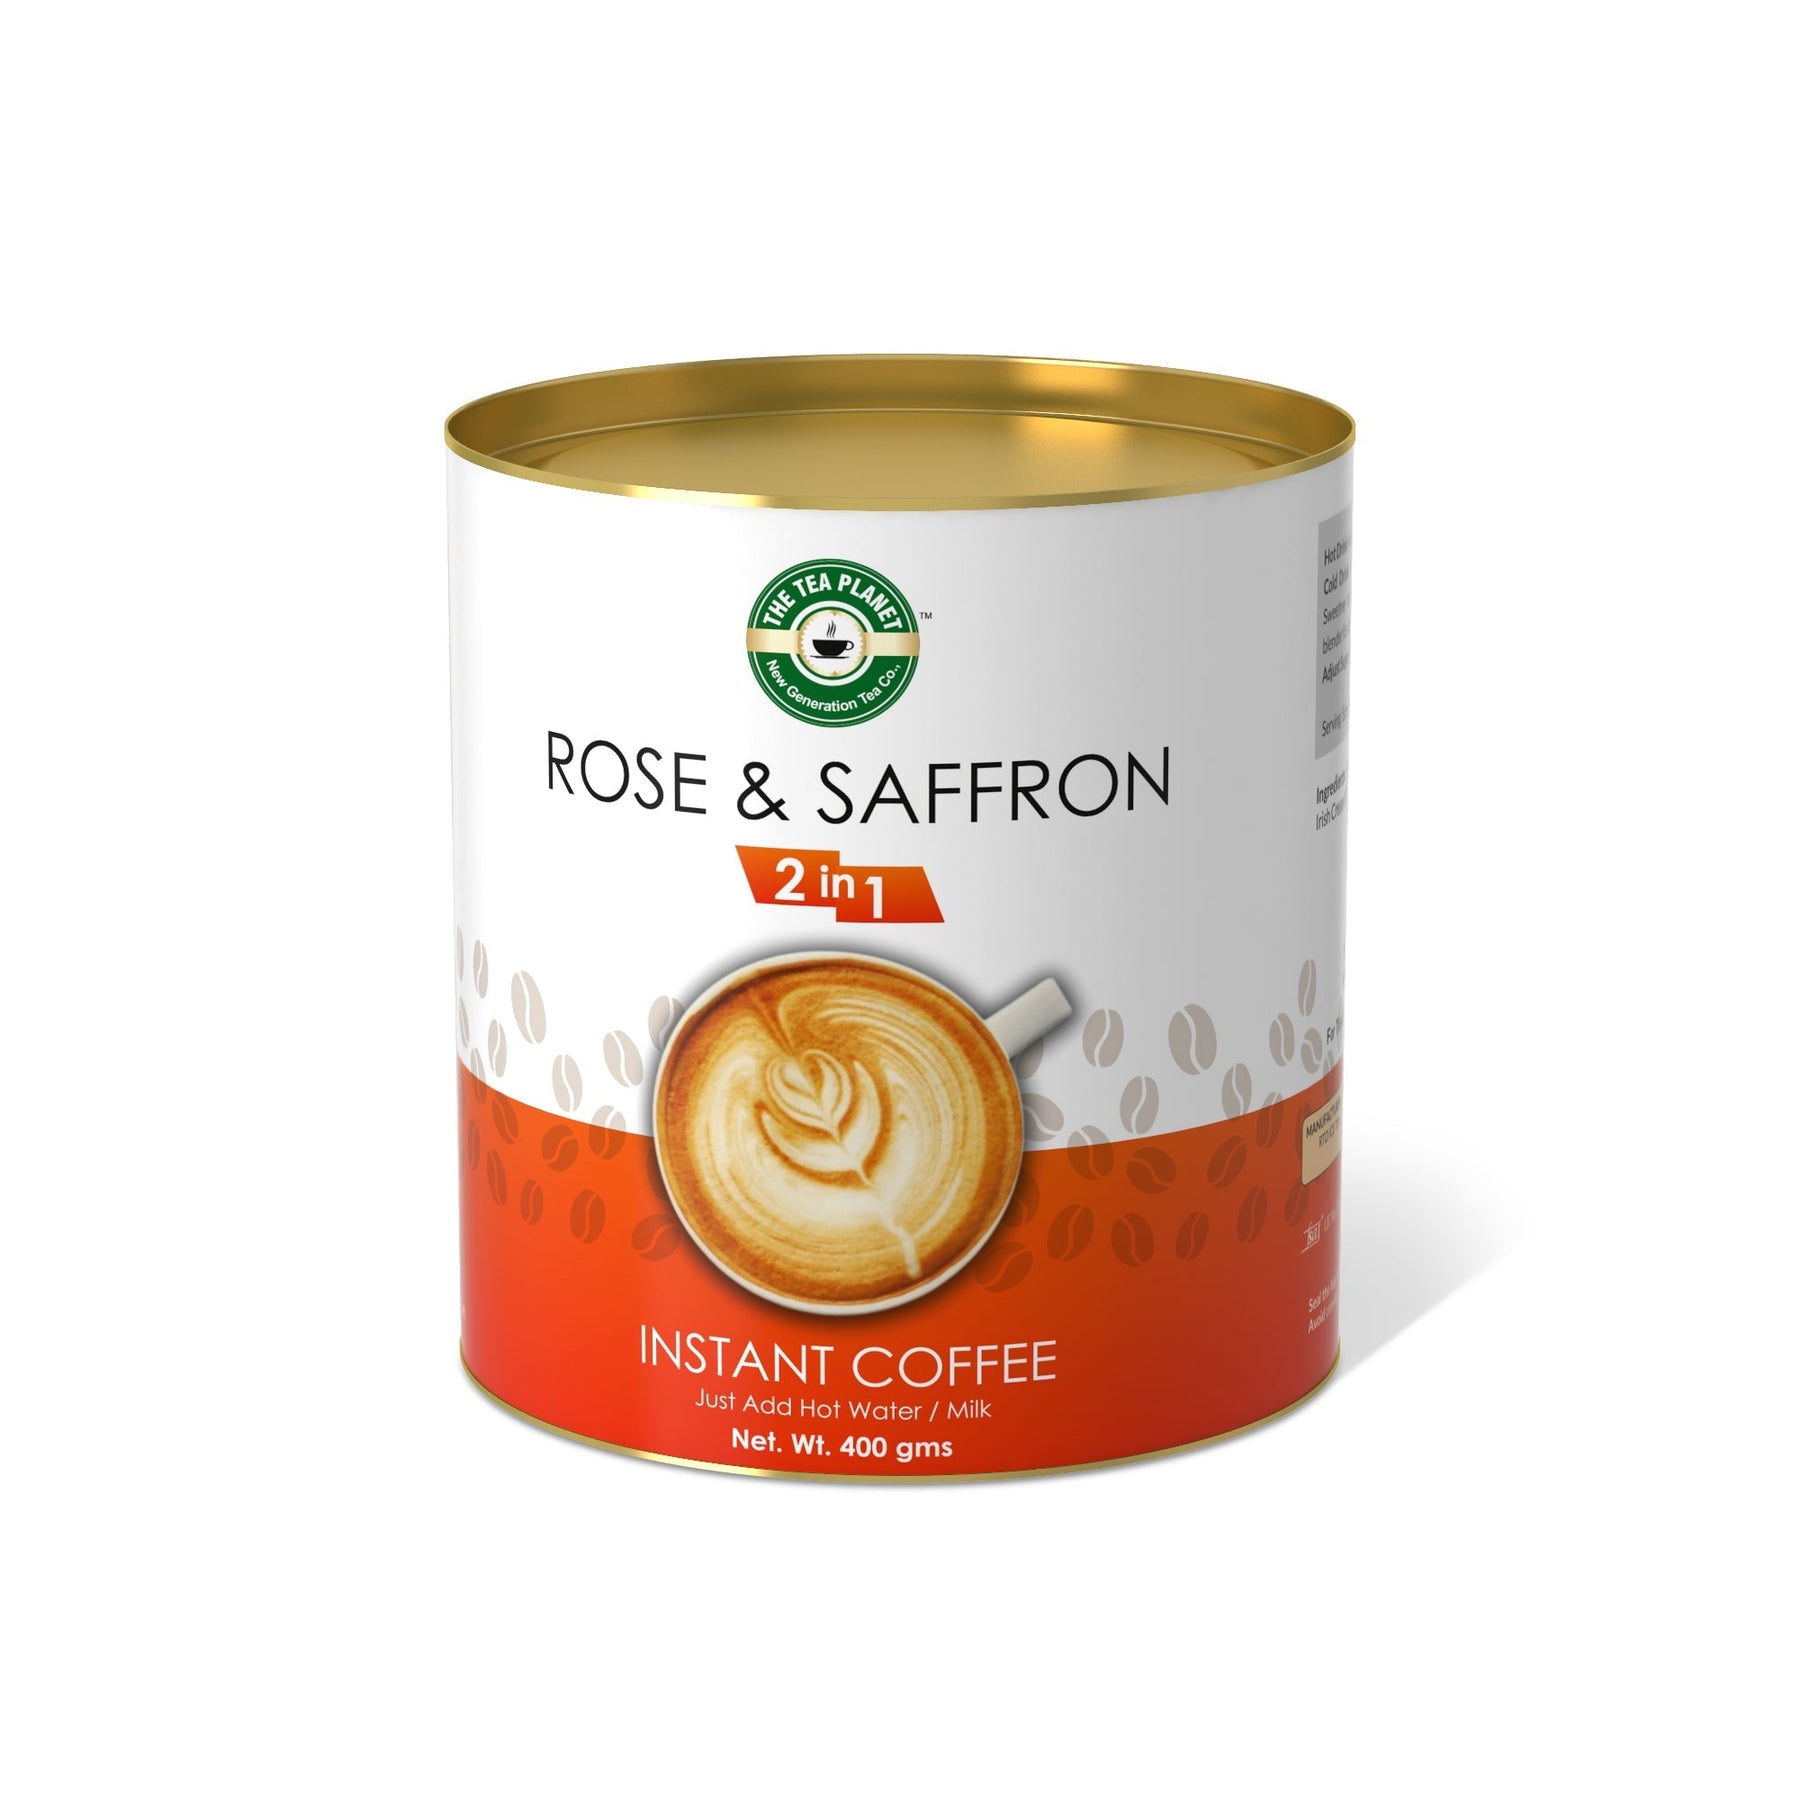 Rose & Saffron Instant Coffee Premix (2 in 1) - 400 gms